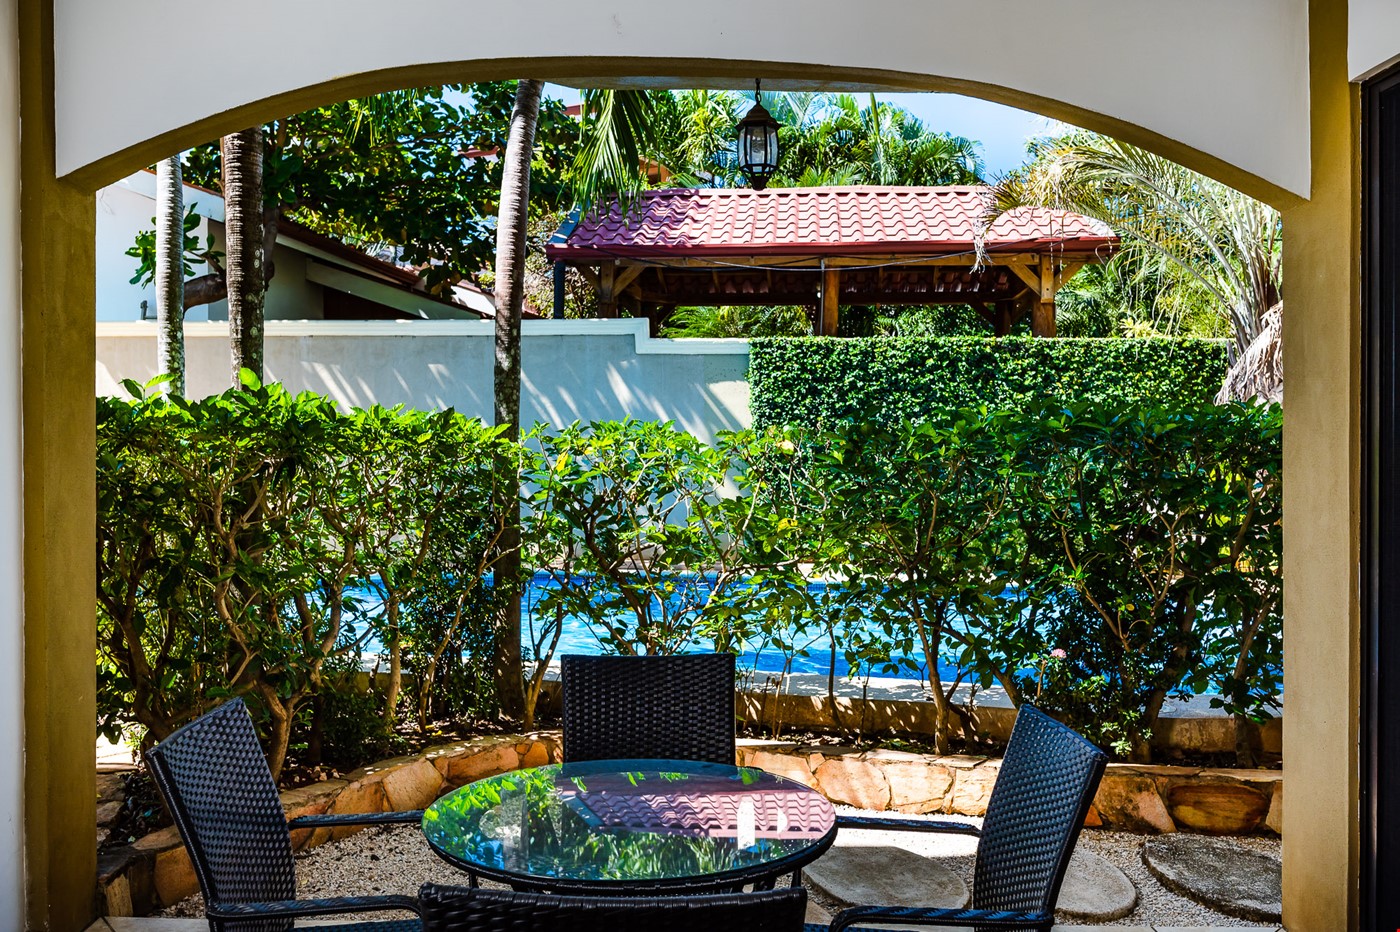 Hotel Playa Langosta Costa Rica nomad remote 78379849-5fd4-4afb-b8d7-7e2b908c56e2_022cbidropcom2021122810574026.jpg